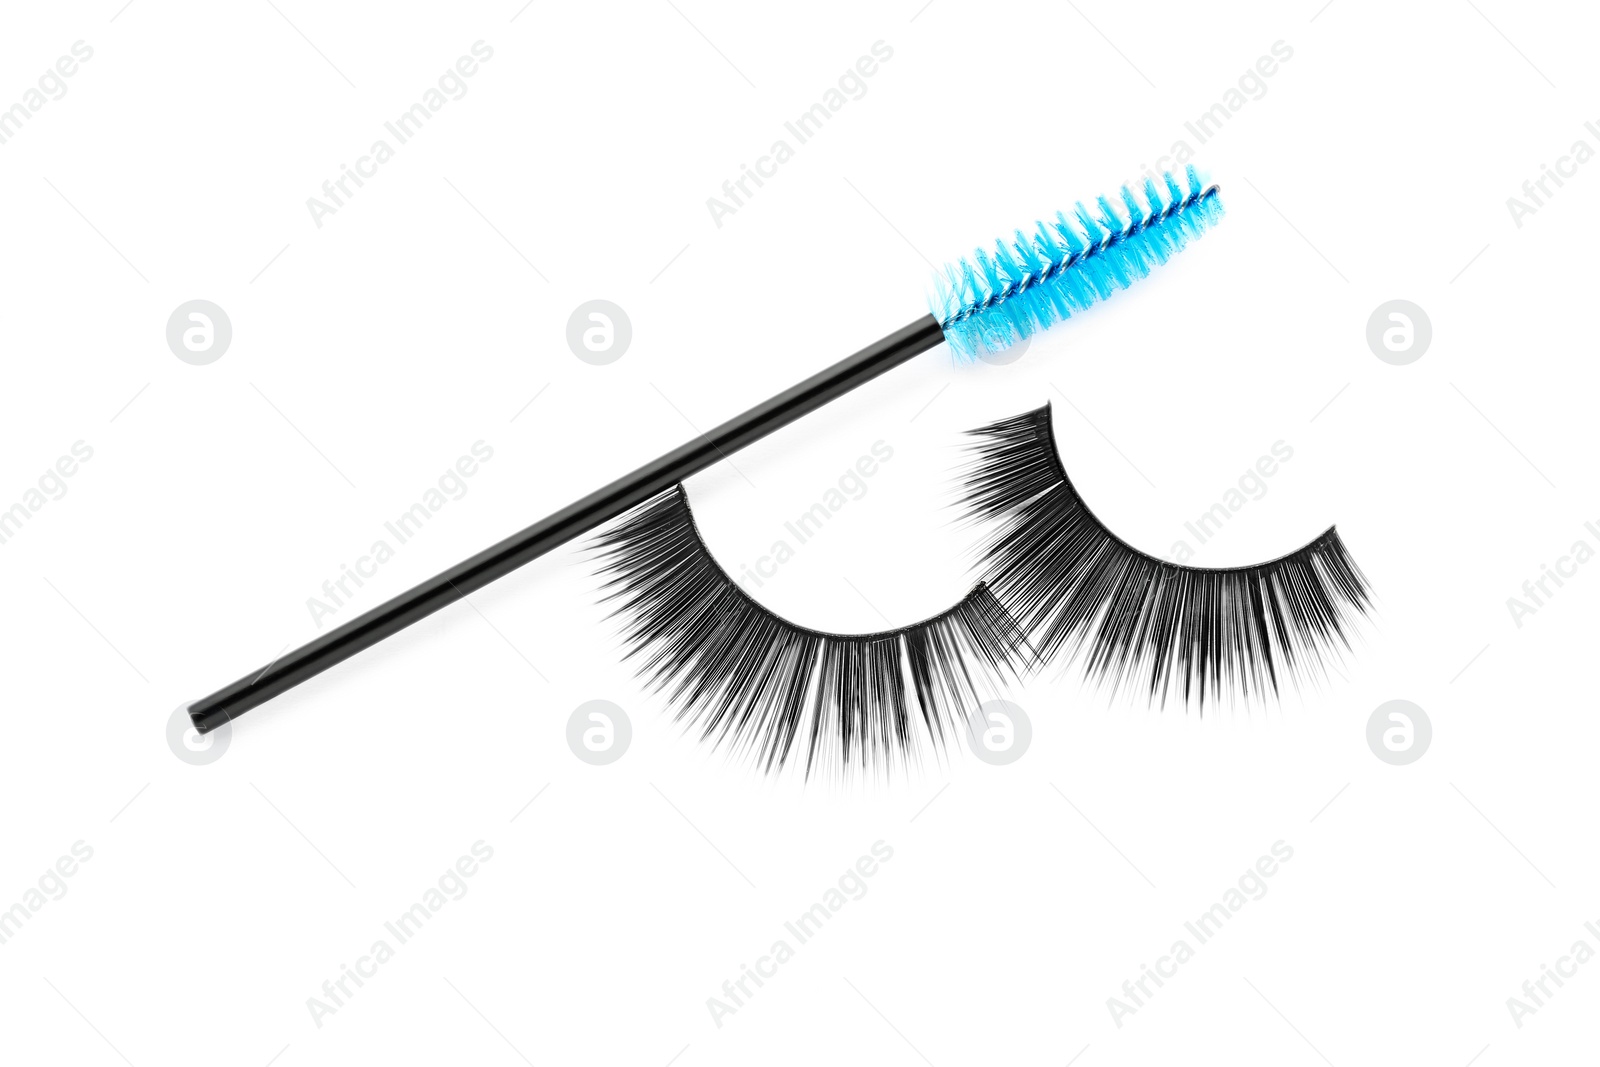 Photo of Fake eyelashes and brush on white background, top view